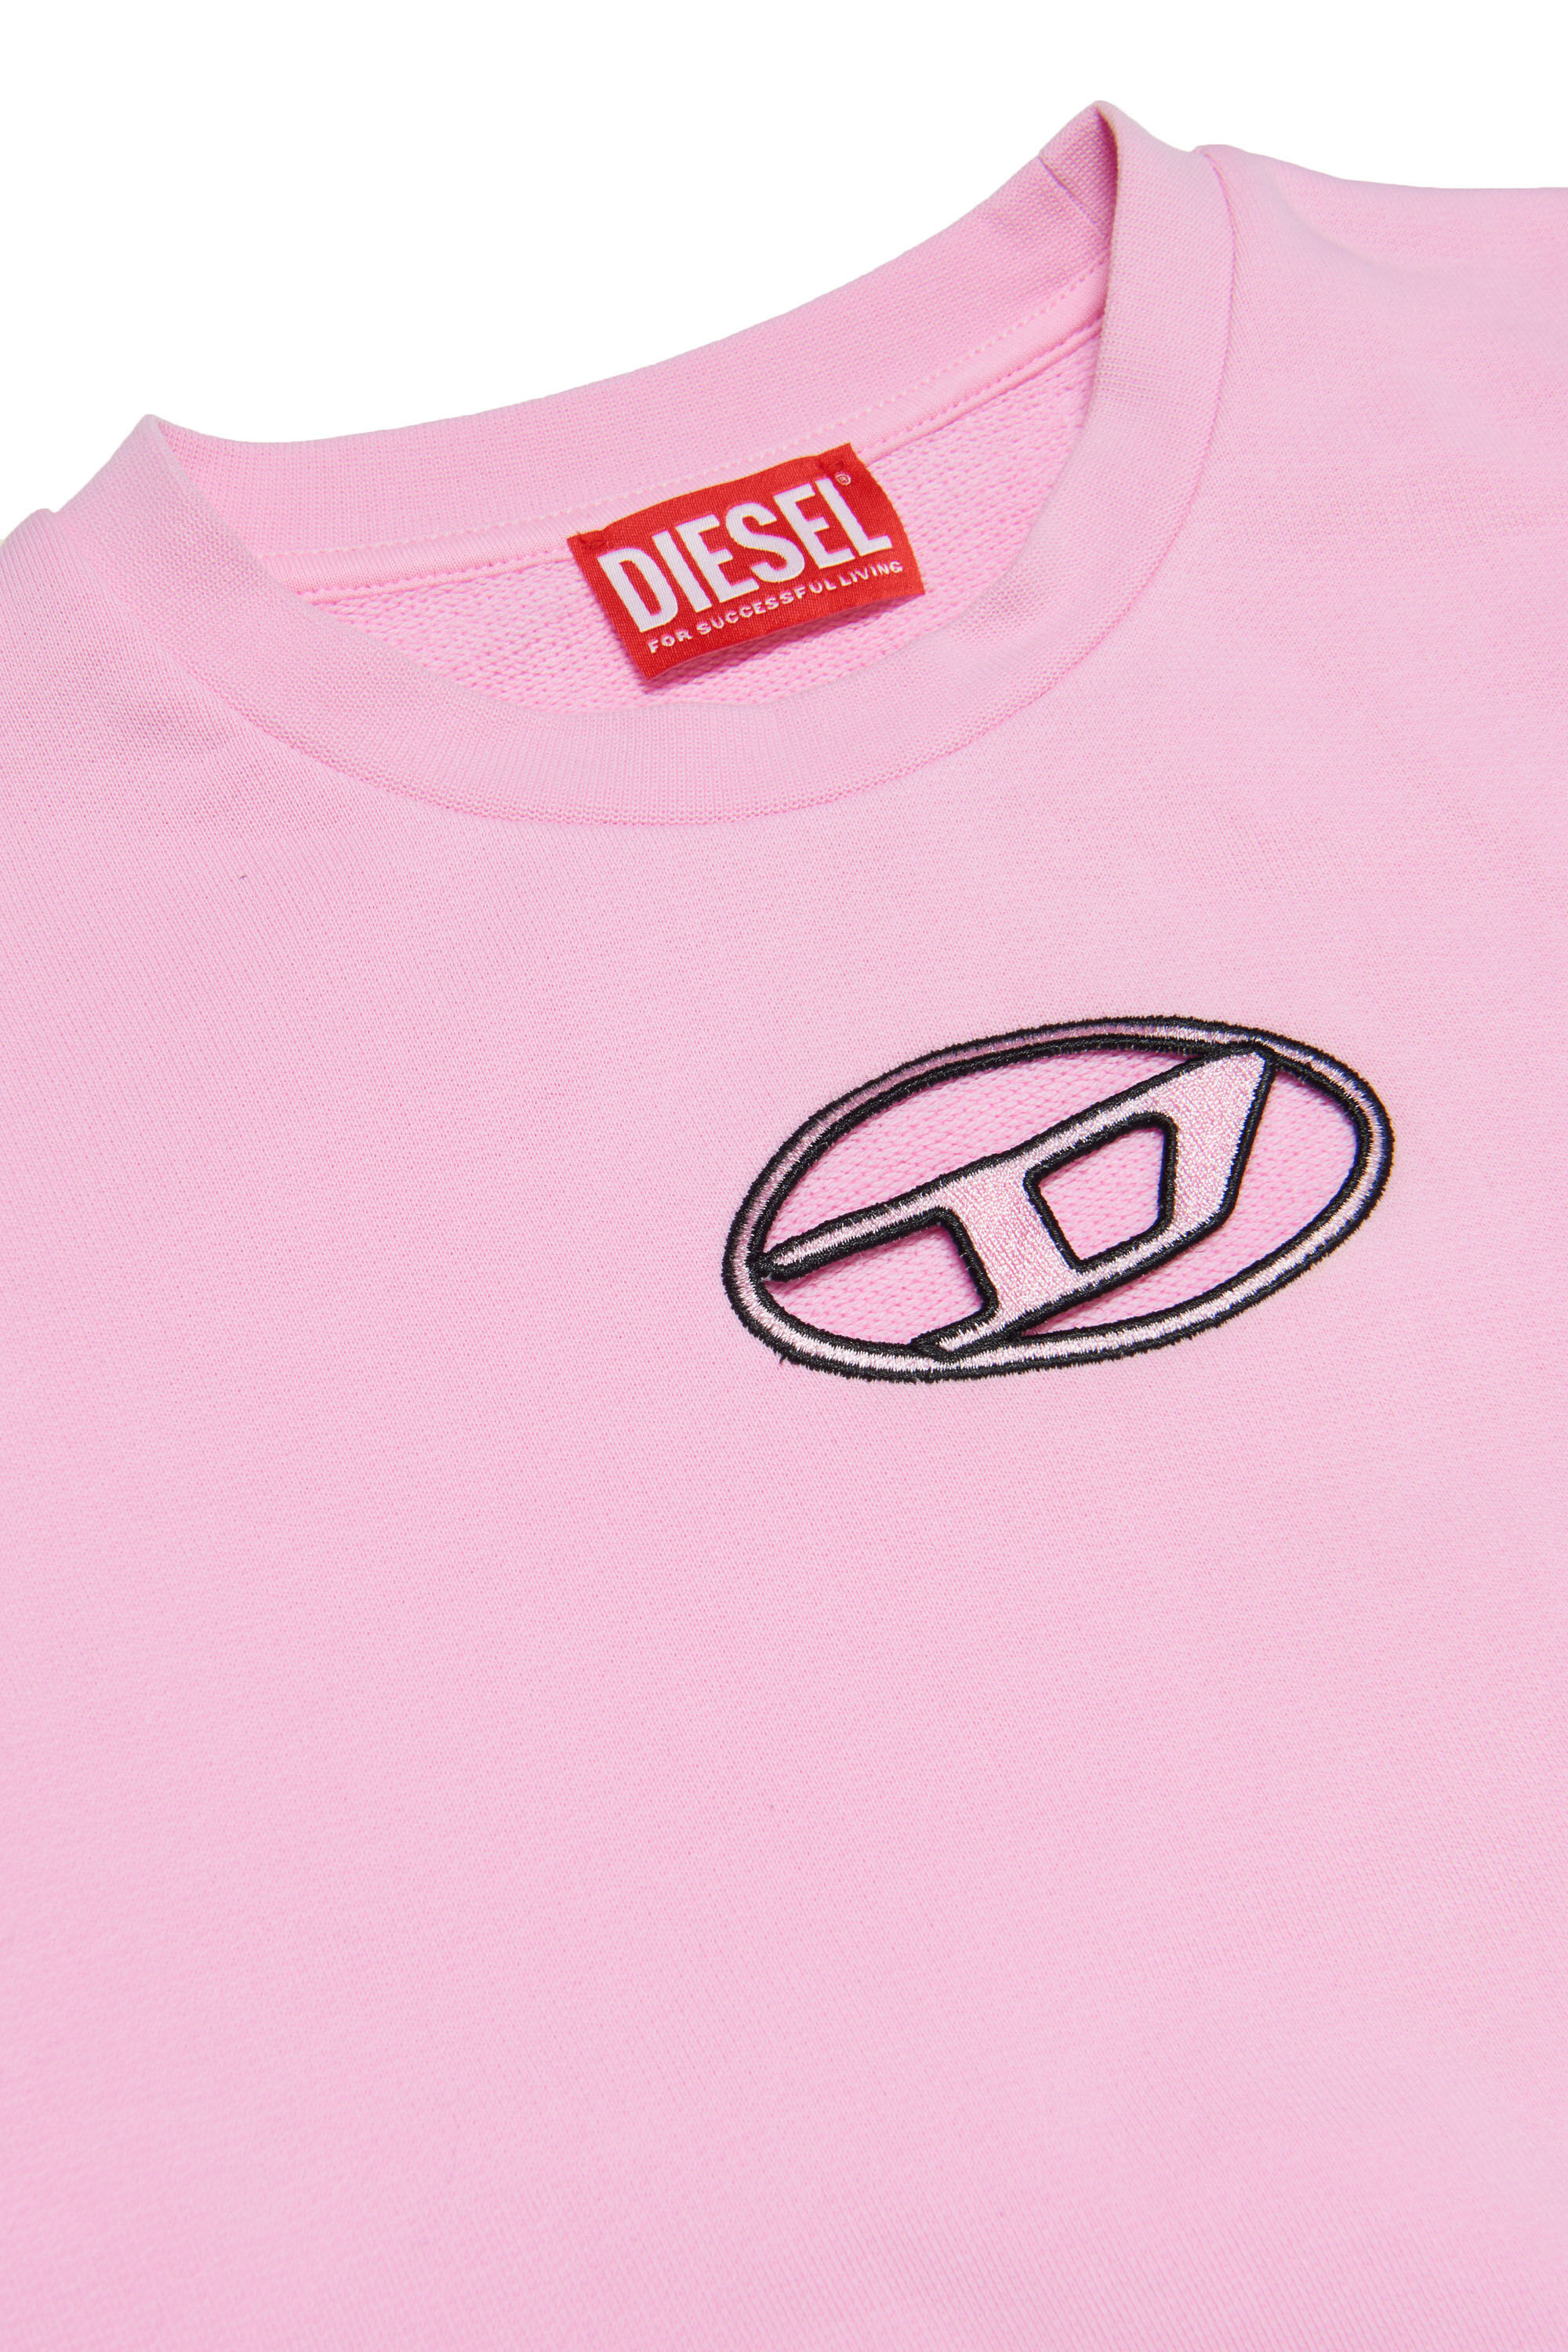 Diesel - STRASLI, Pink - Image 3